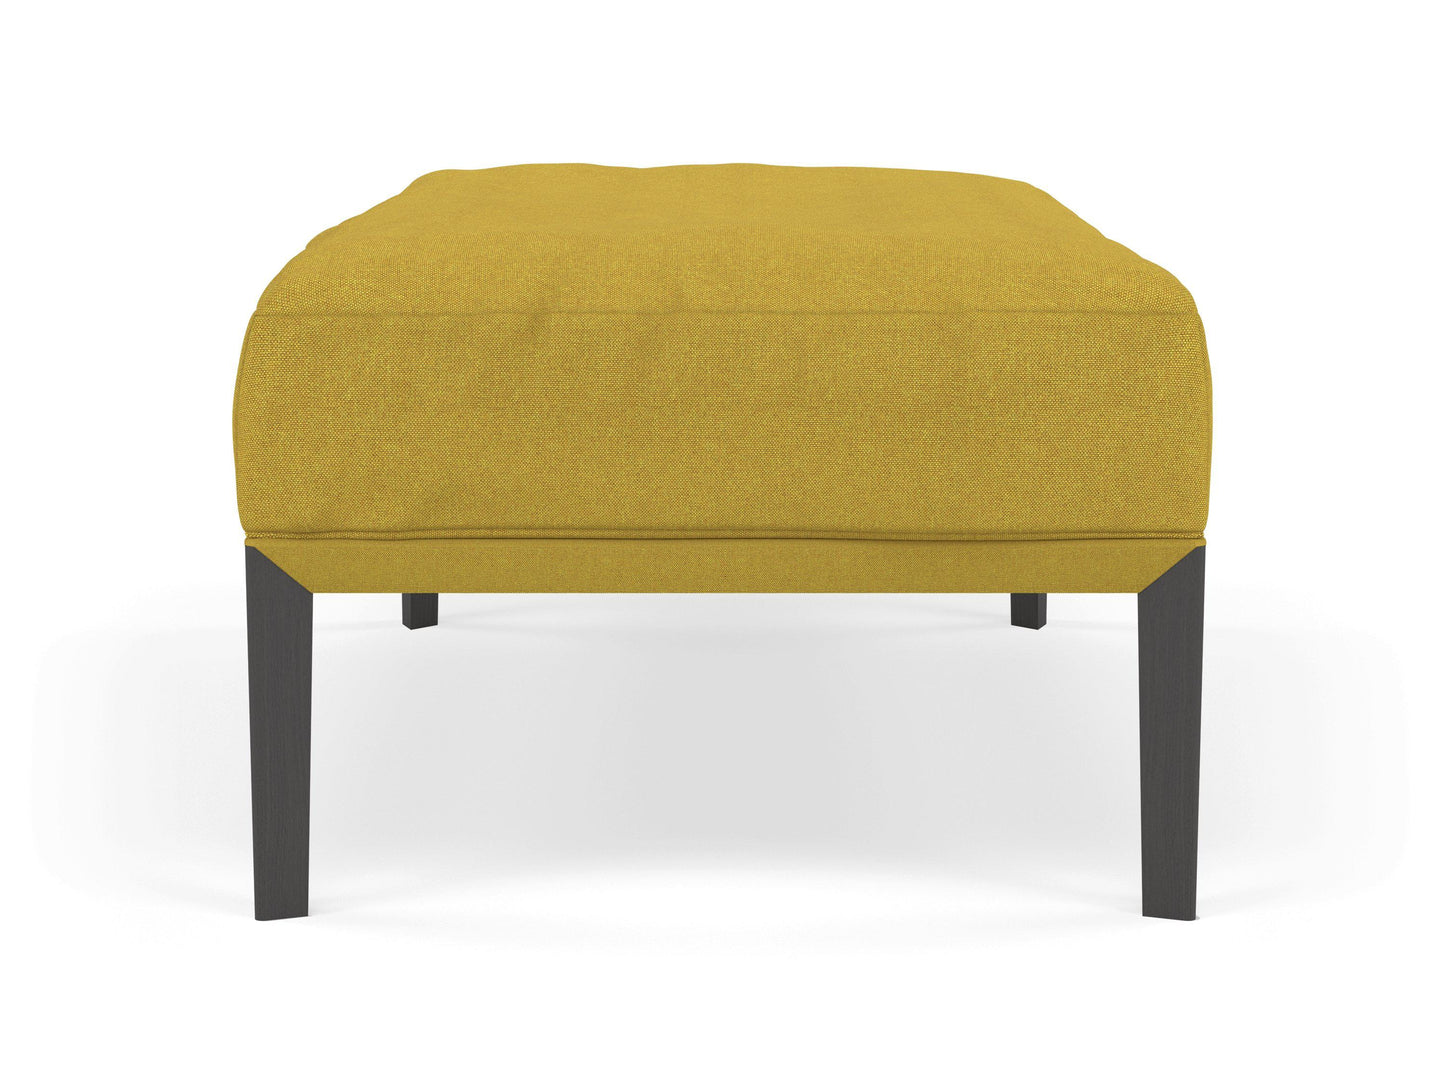 Modern Pouffe Footstool Ottoman Rectangular Seat 103x65cm in Vibrant Mustard Yellow Fabric-Distinct Designs (London) Ltd